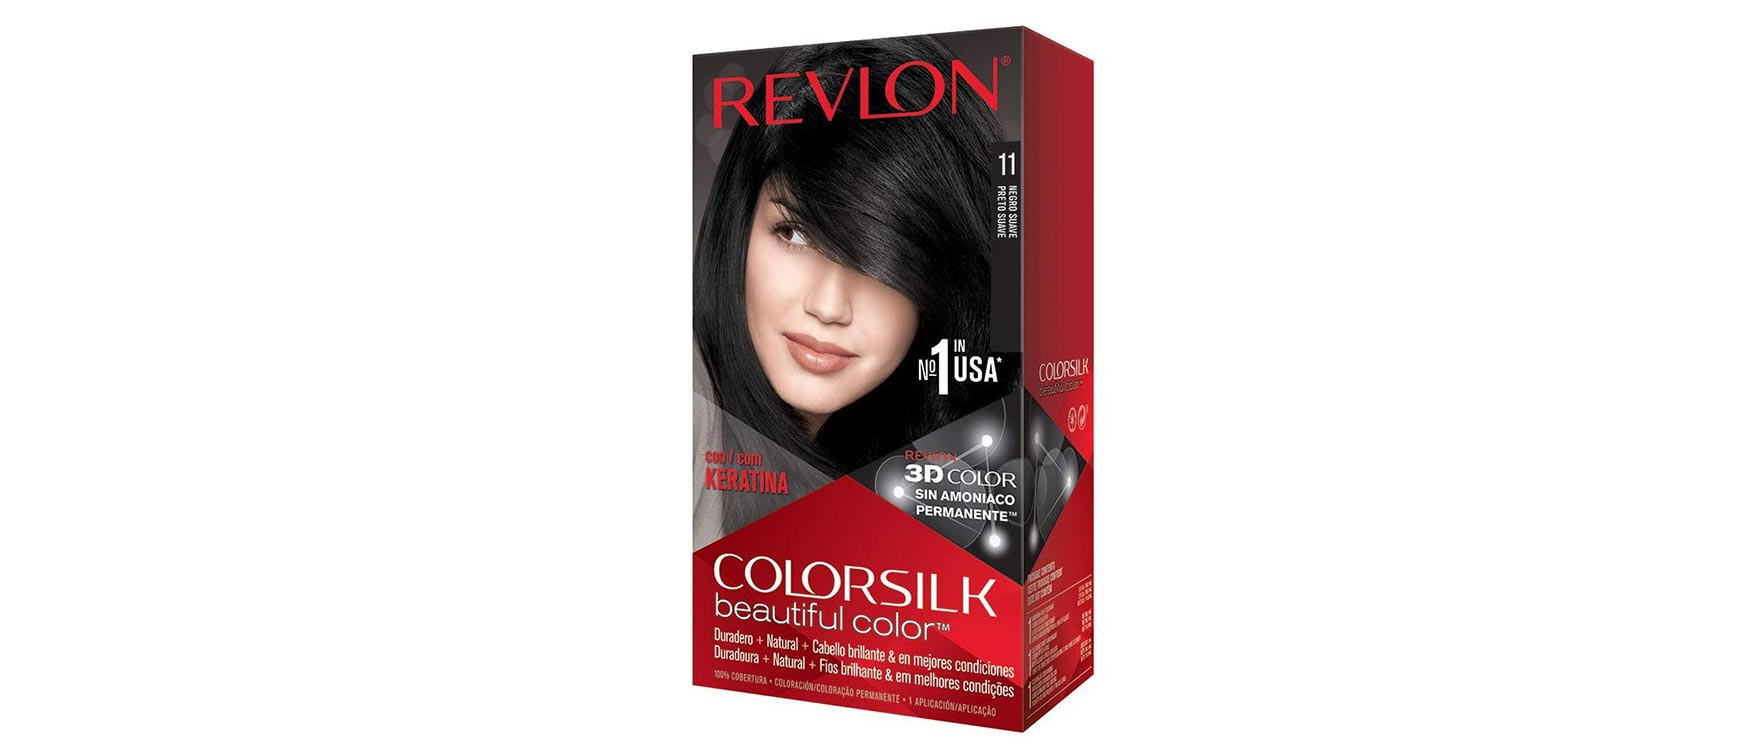 1. Revlon Colorsilk Beautiful Color- 11 Soft Black